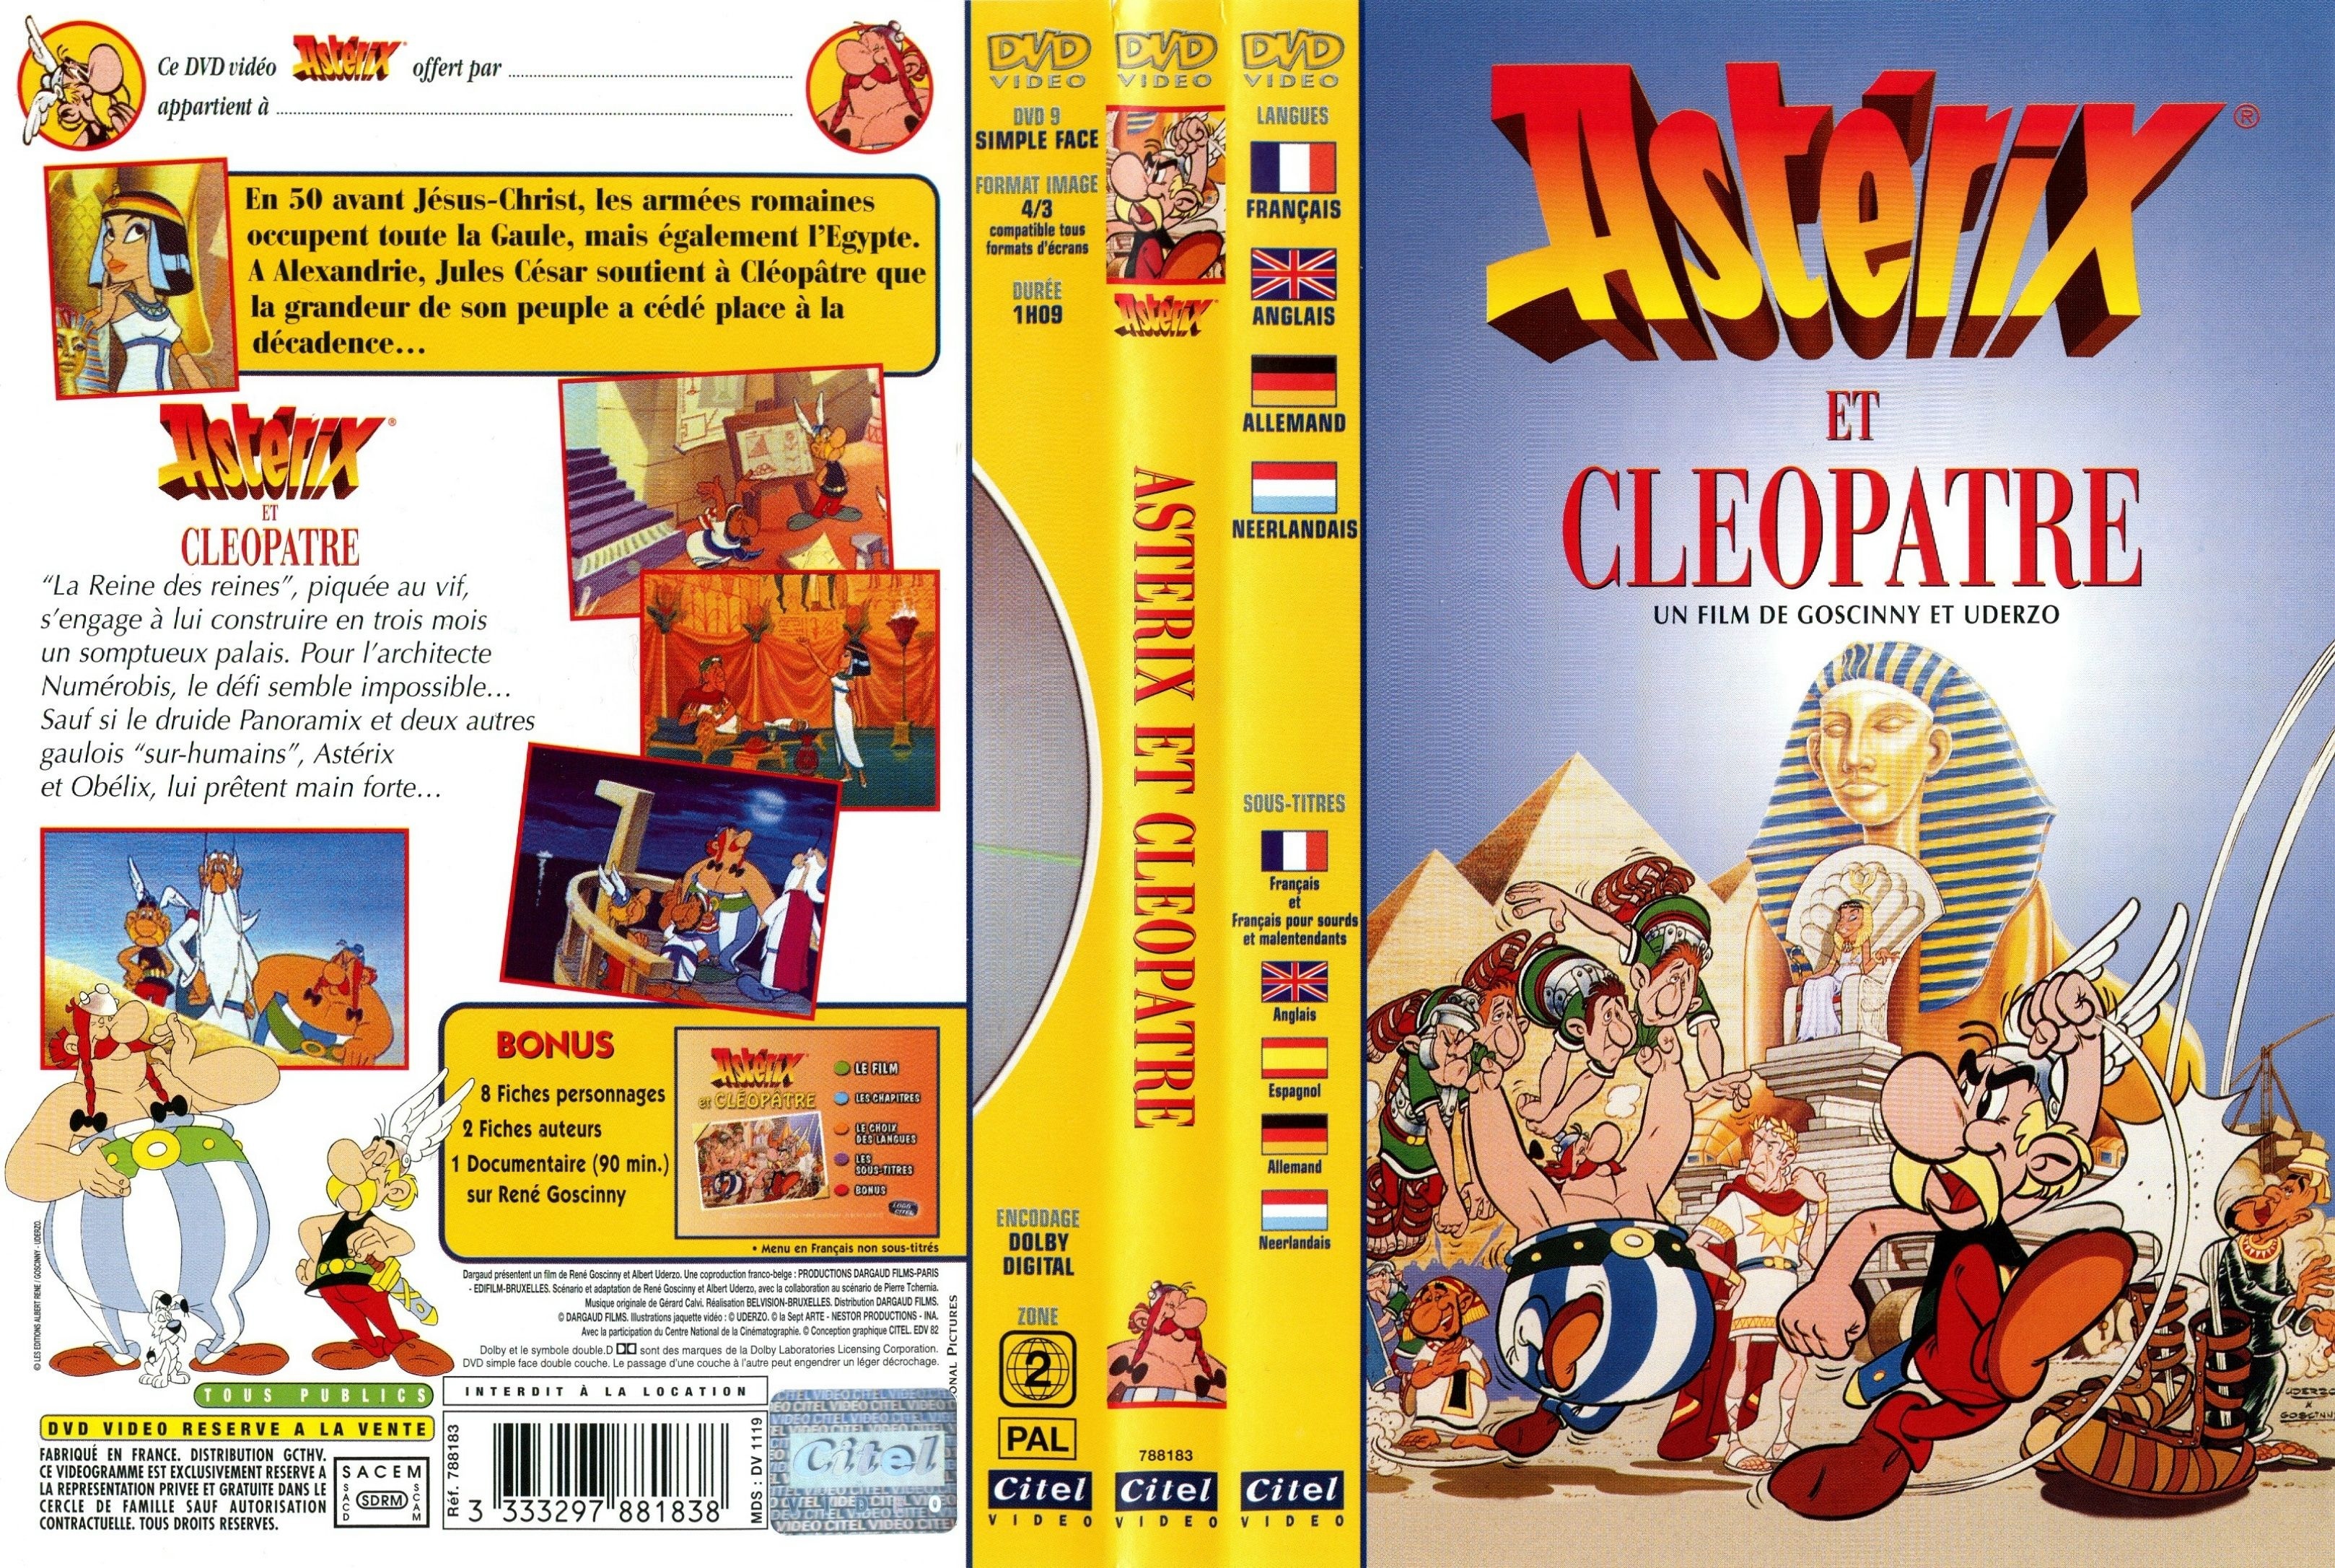 Jaquette DVD Asterix et Cleopatre v2